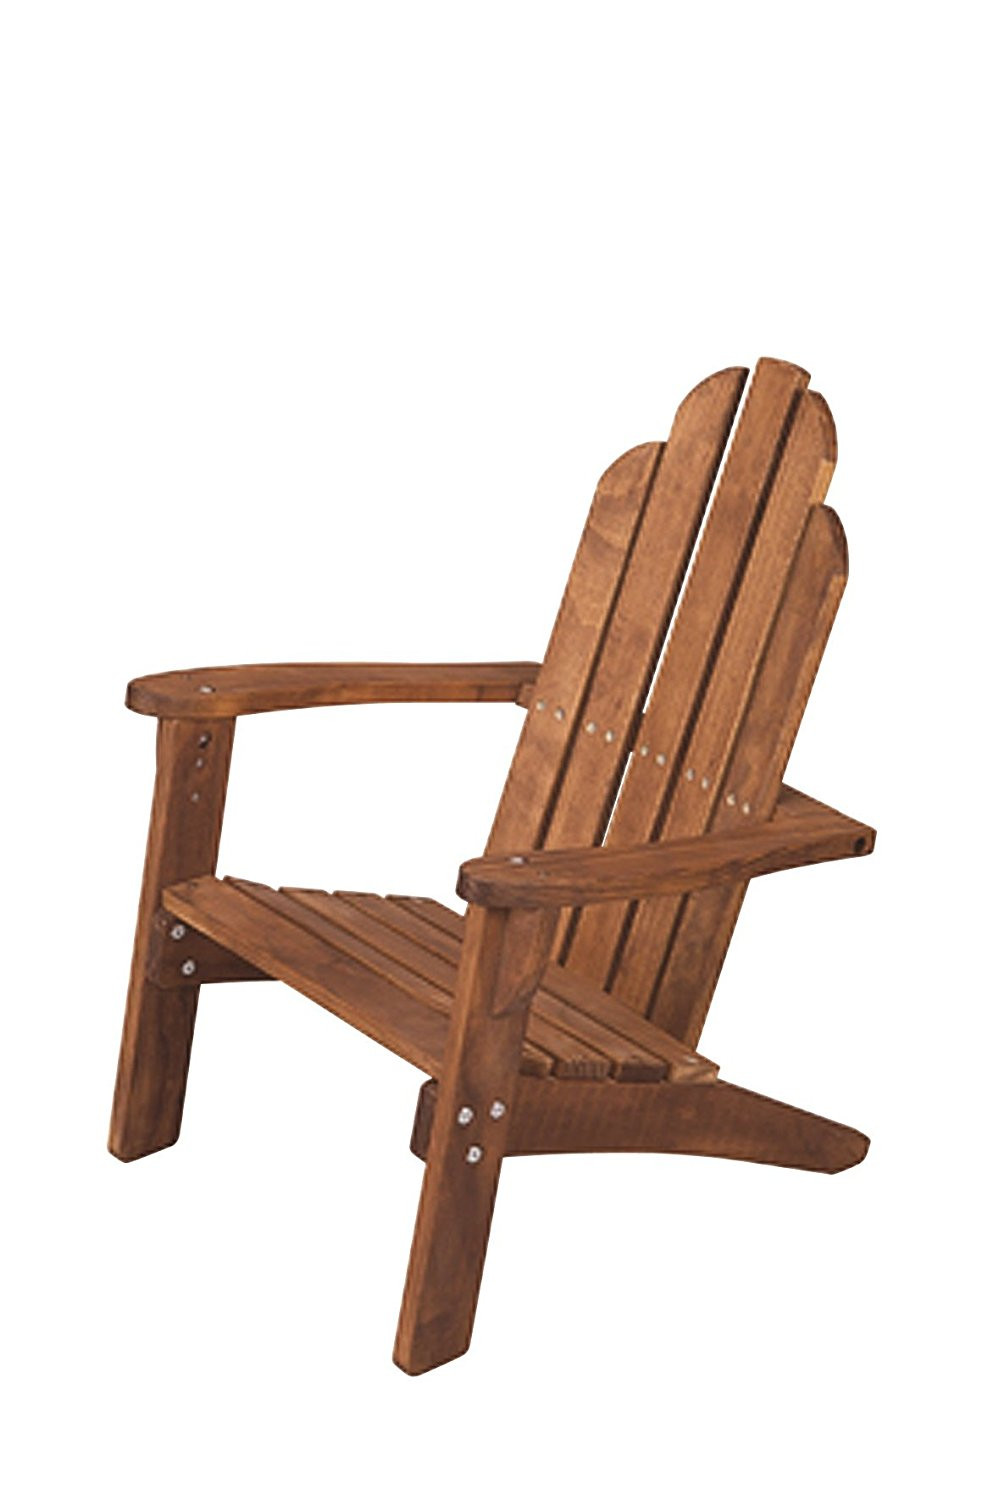 Kids Patio Chair
 Maxim Child’s Adirondack Chair Kids Outdoor Wood Patio